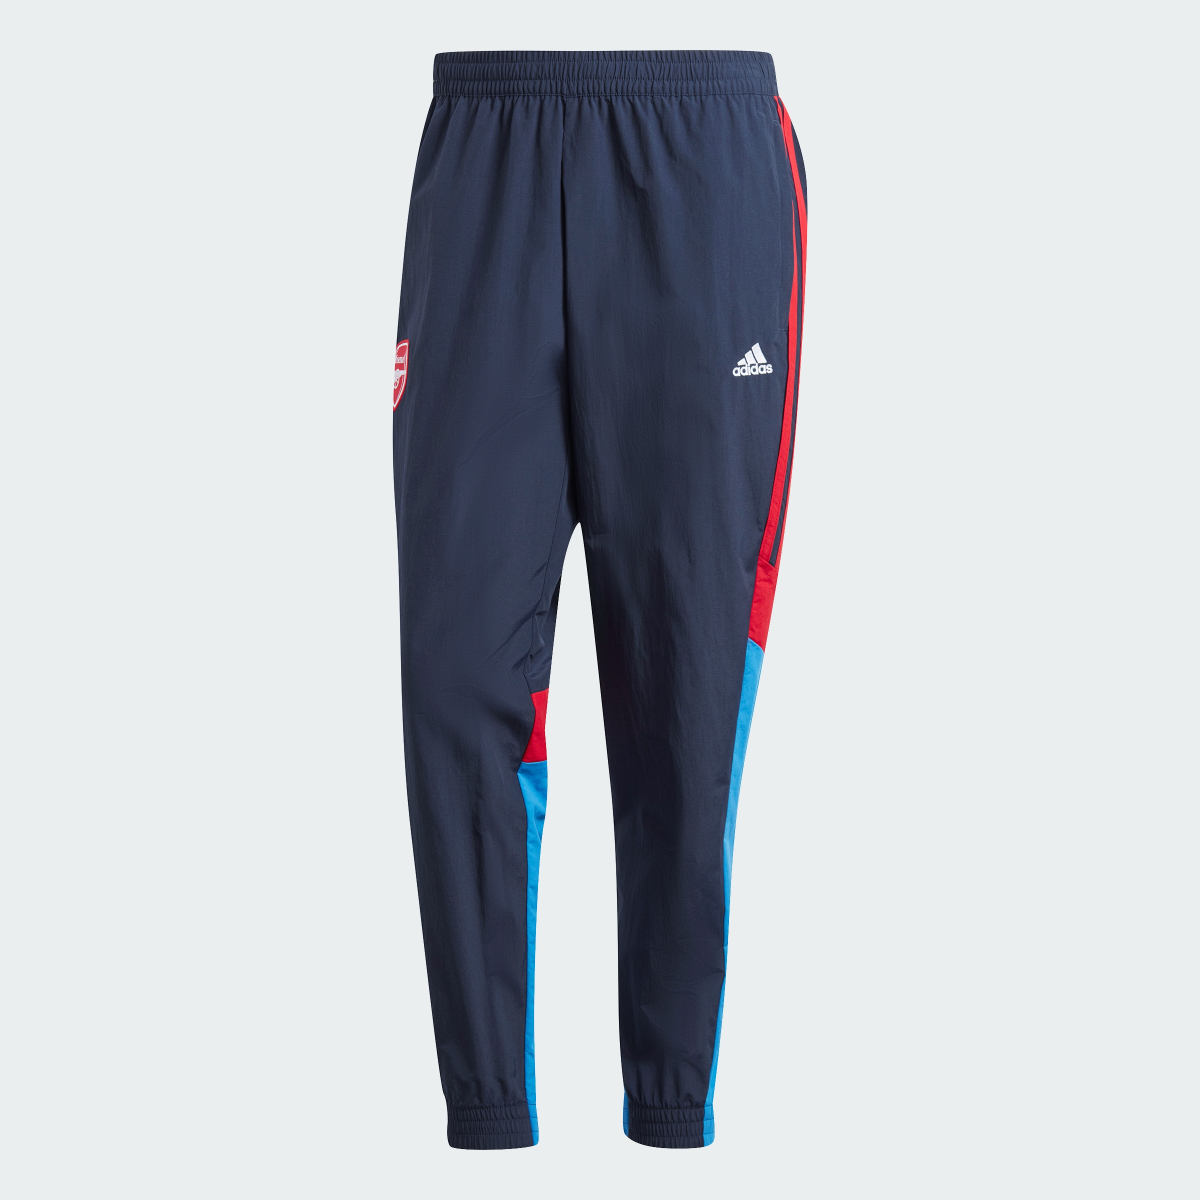 Adidas Arsenal Woven Track Pants. 5